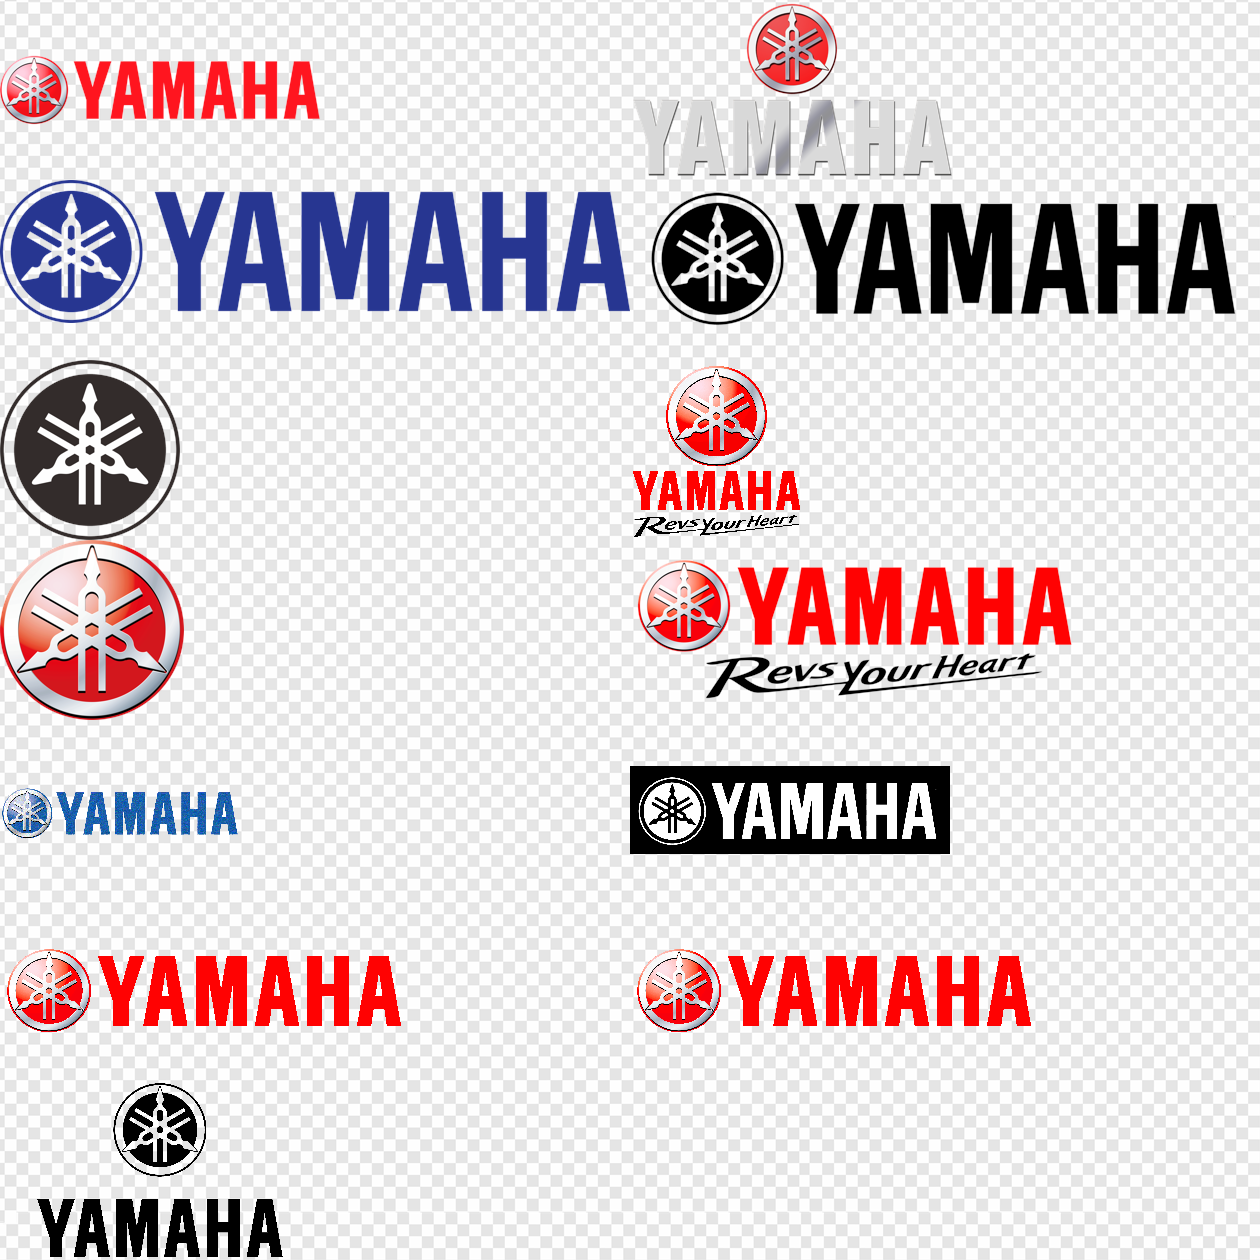 Yamaha Motorcycle Logo Splat Decal Sticker - DecalMonster.com